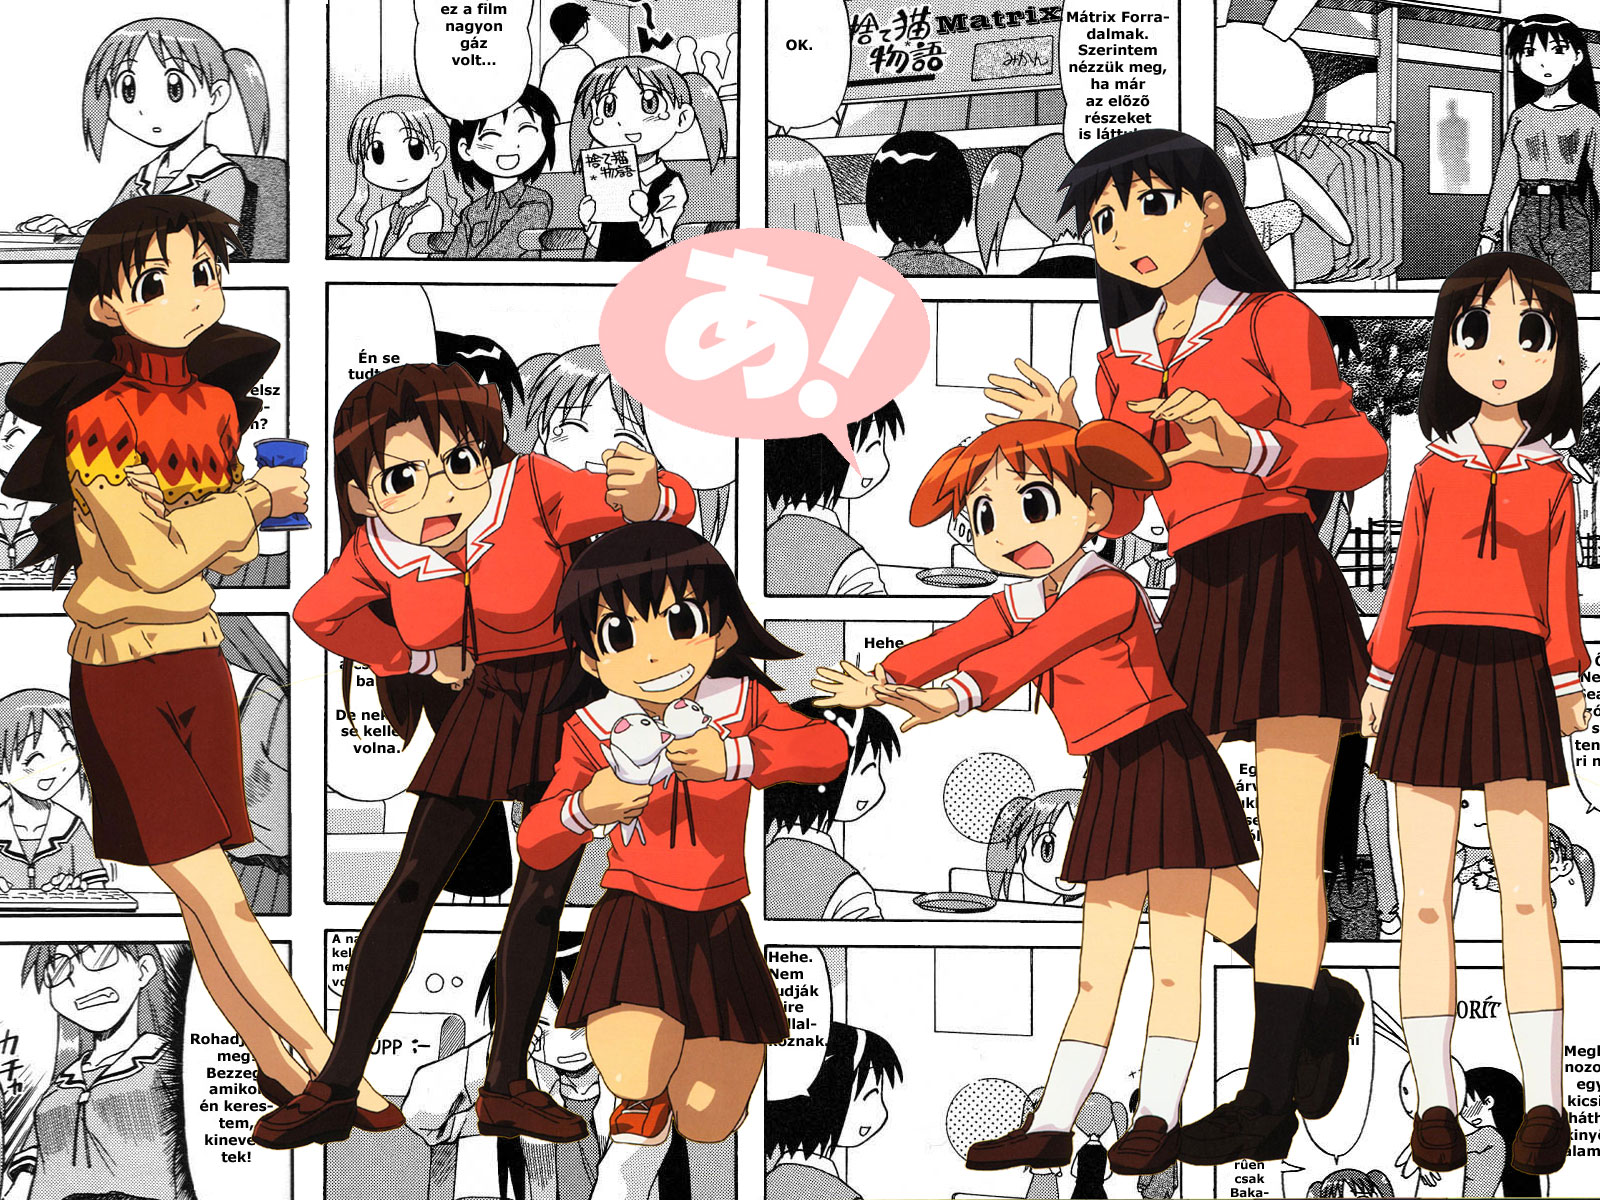 Anime Azumanga Daioh Wallpaper